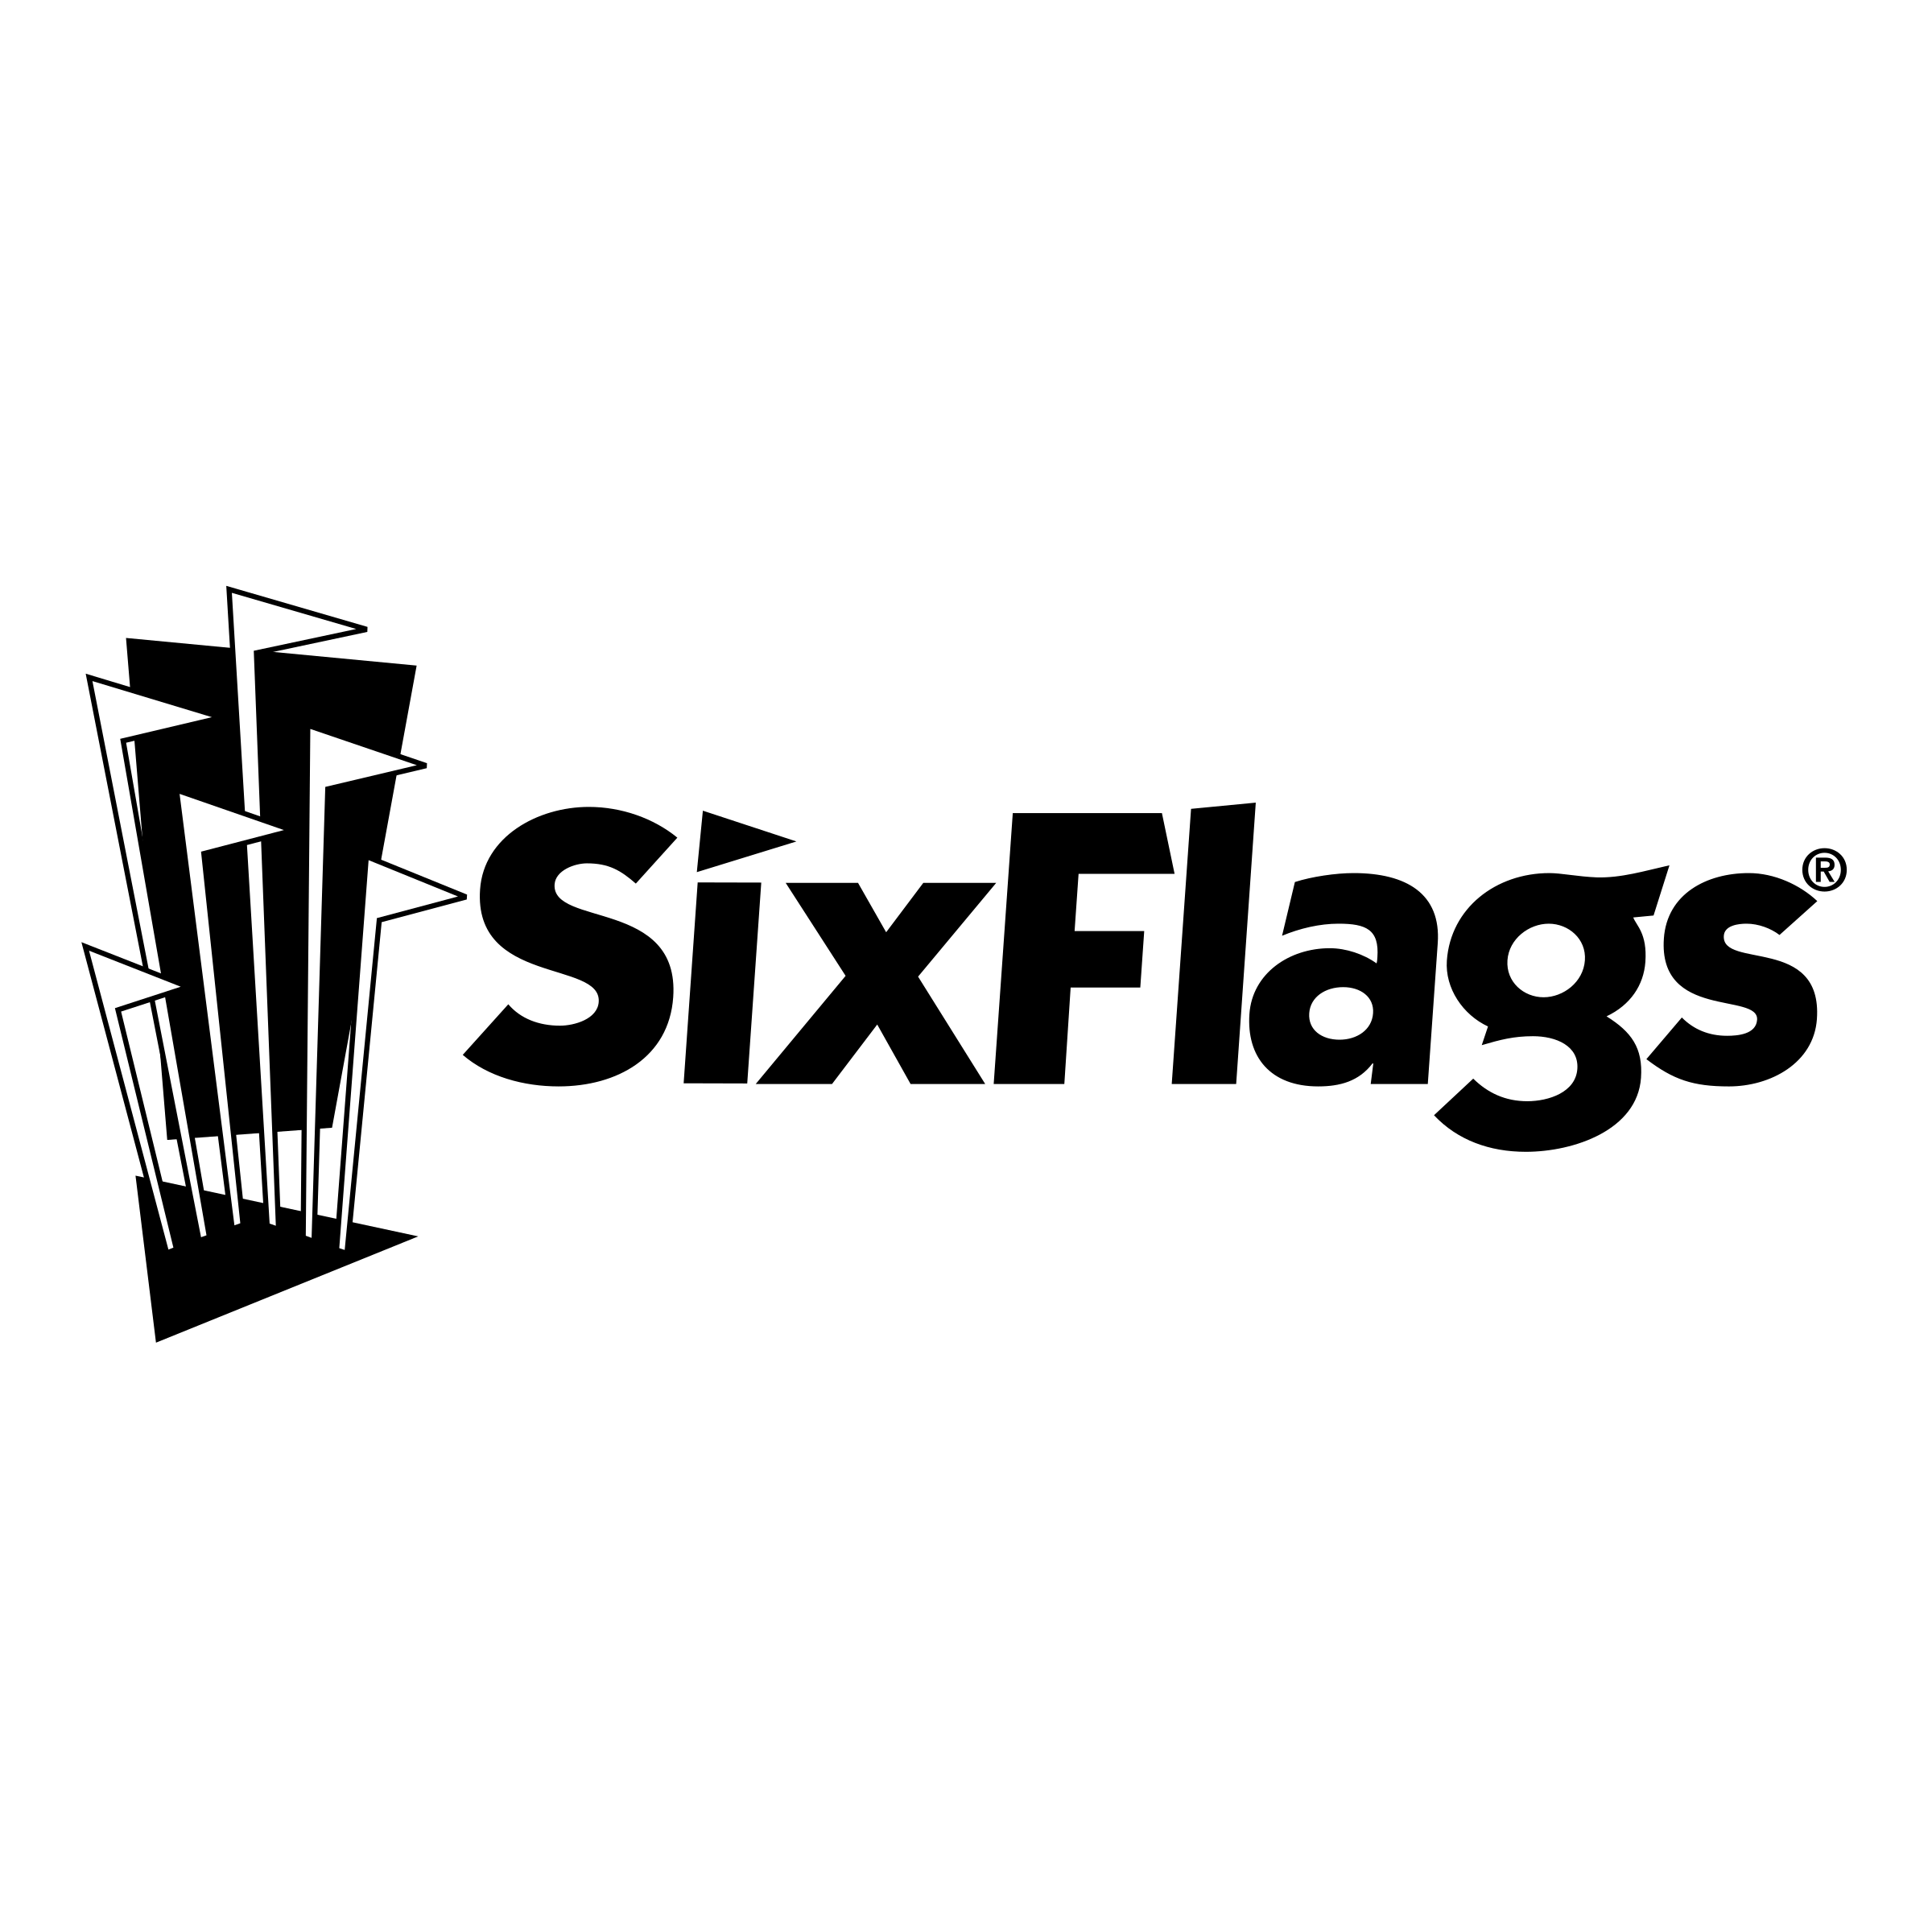 Six Logo - Six Flags Logo PNG Transparent & SVG Vector - Freebie Supply